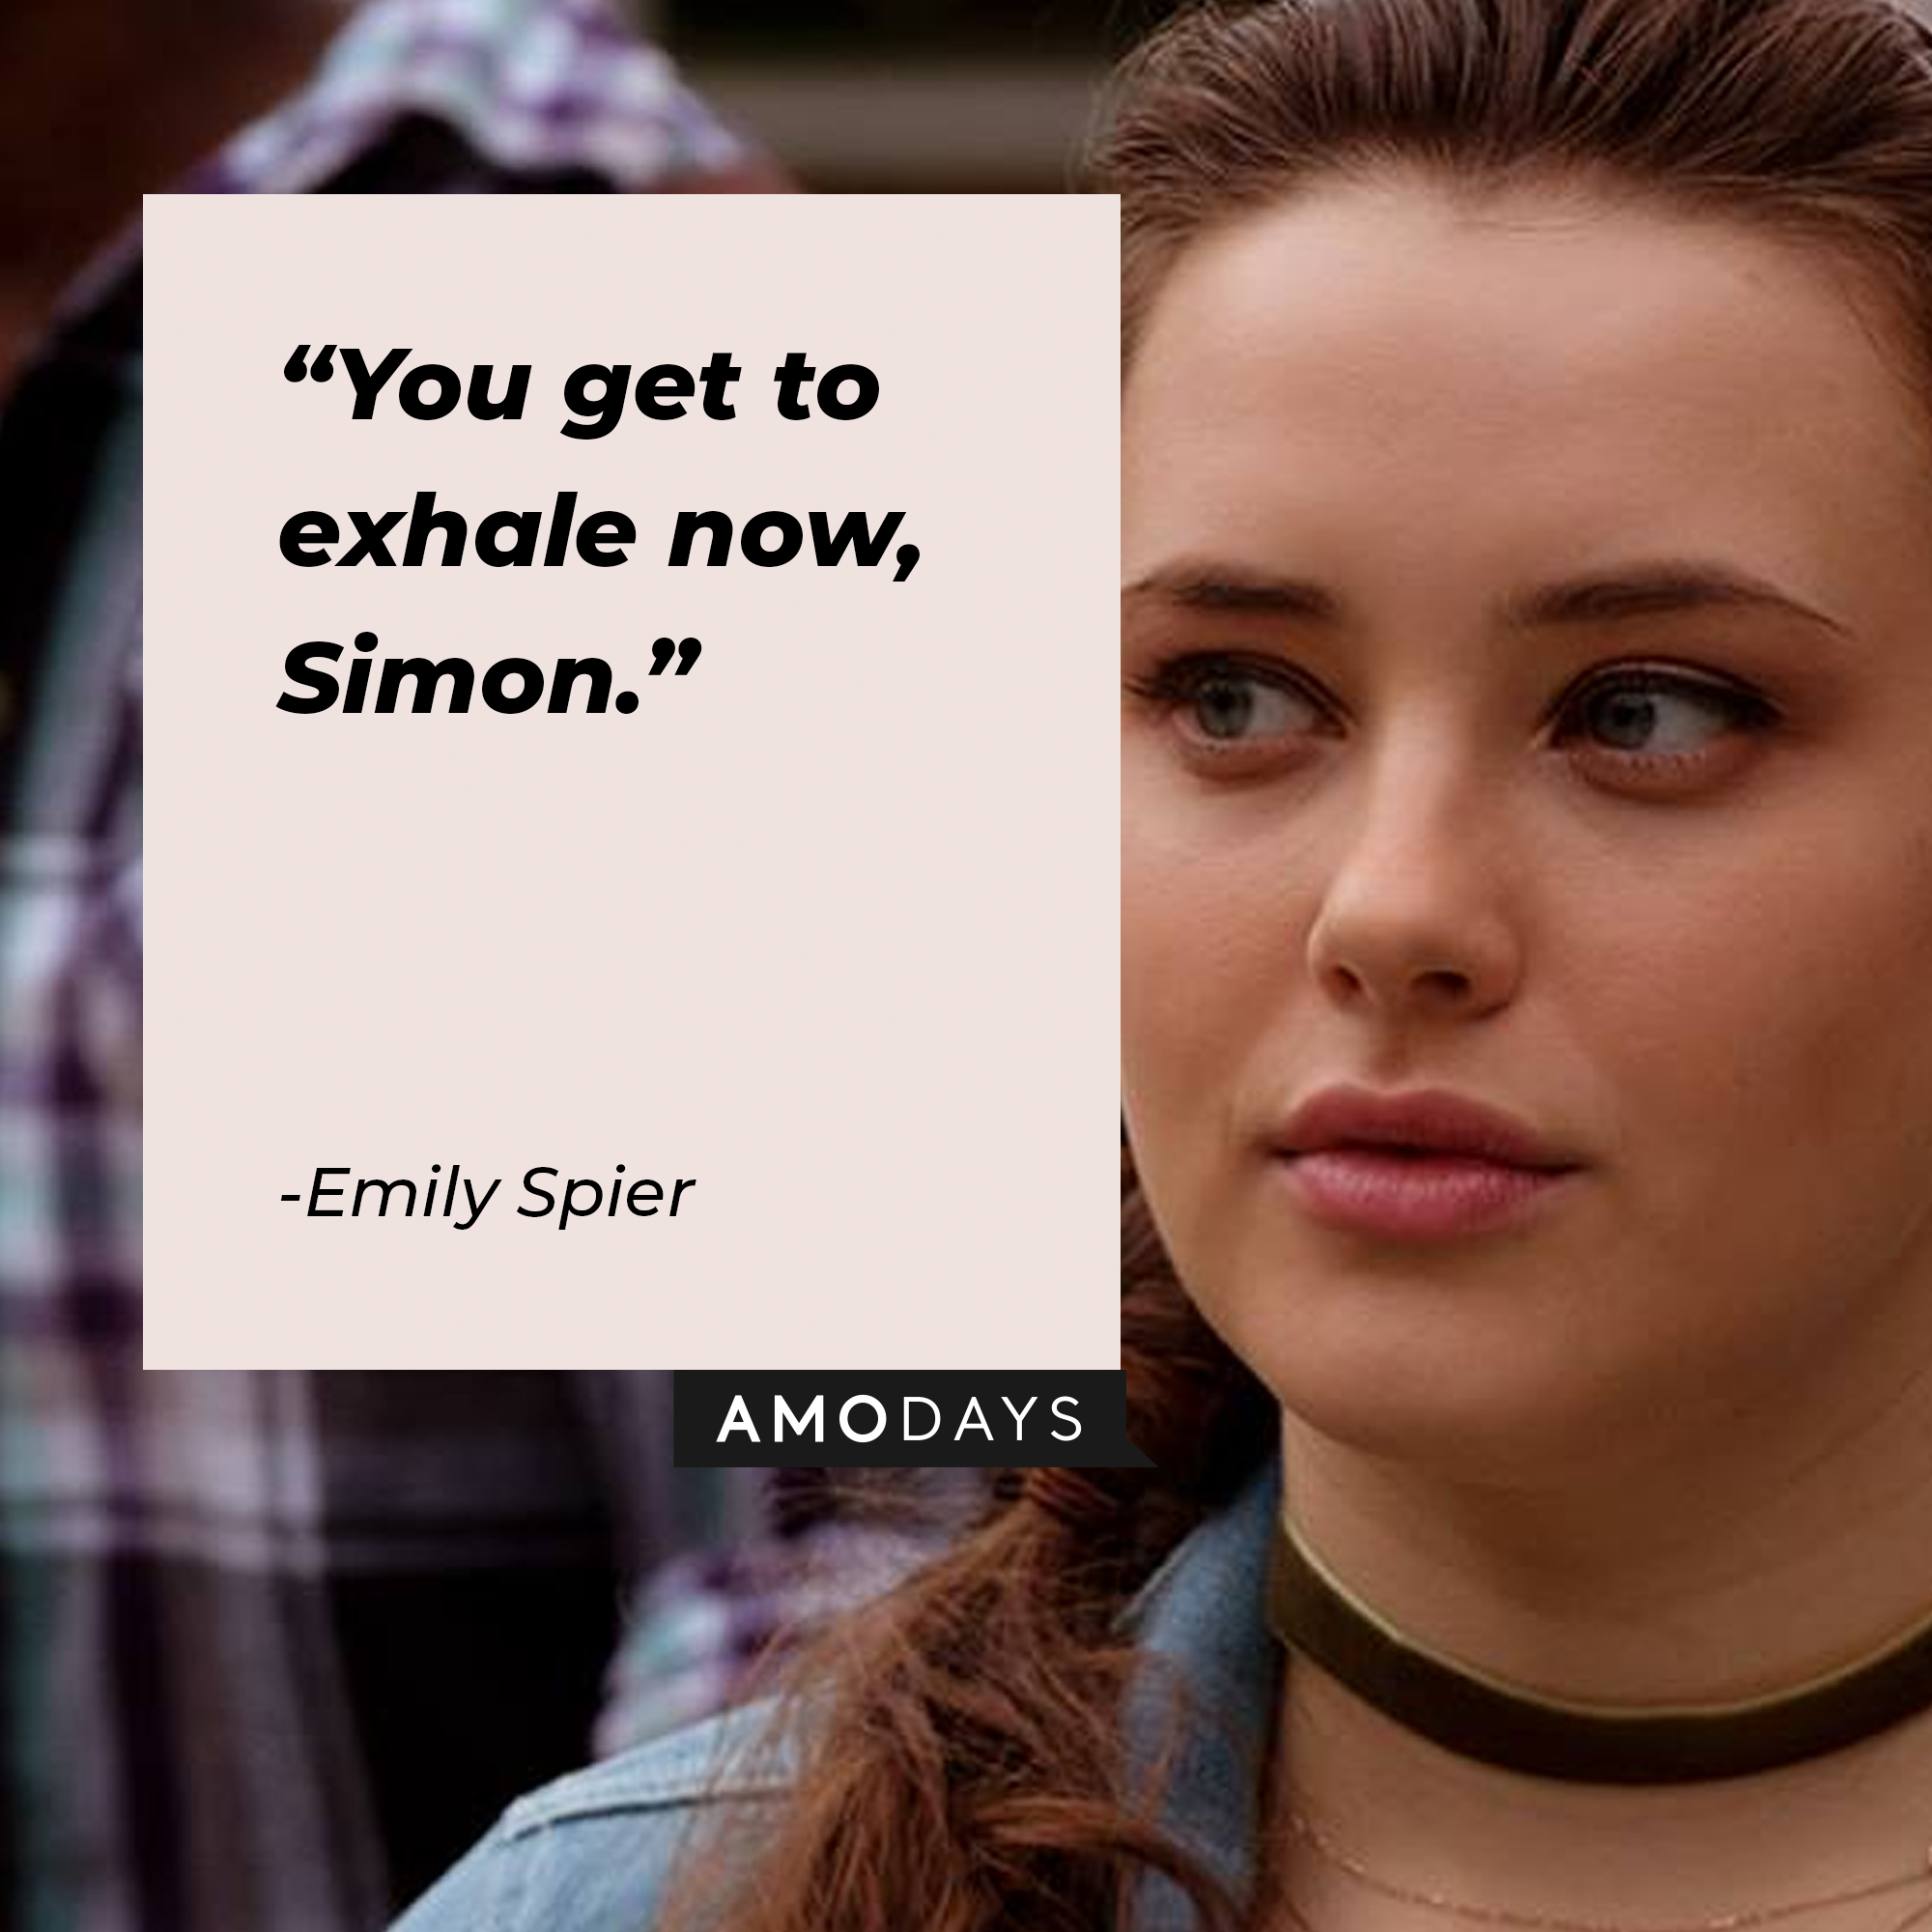 Emily Spier's quote, "You get to exhale now, Simon." | Image: facebook.com/LoveSimonMovie